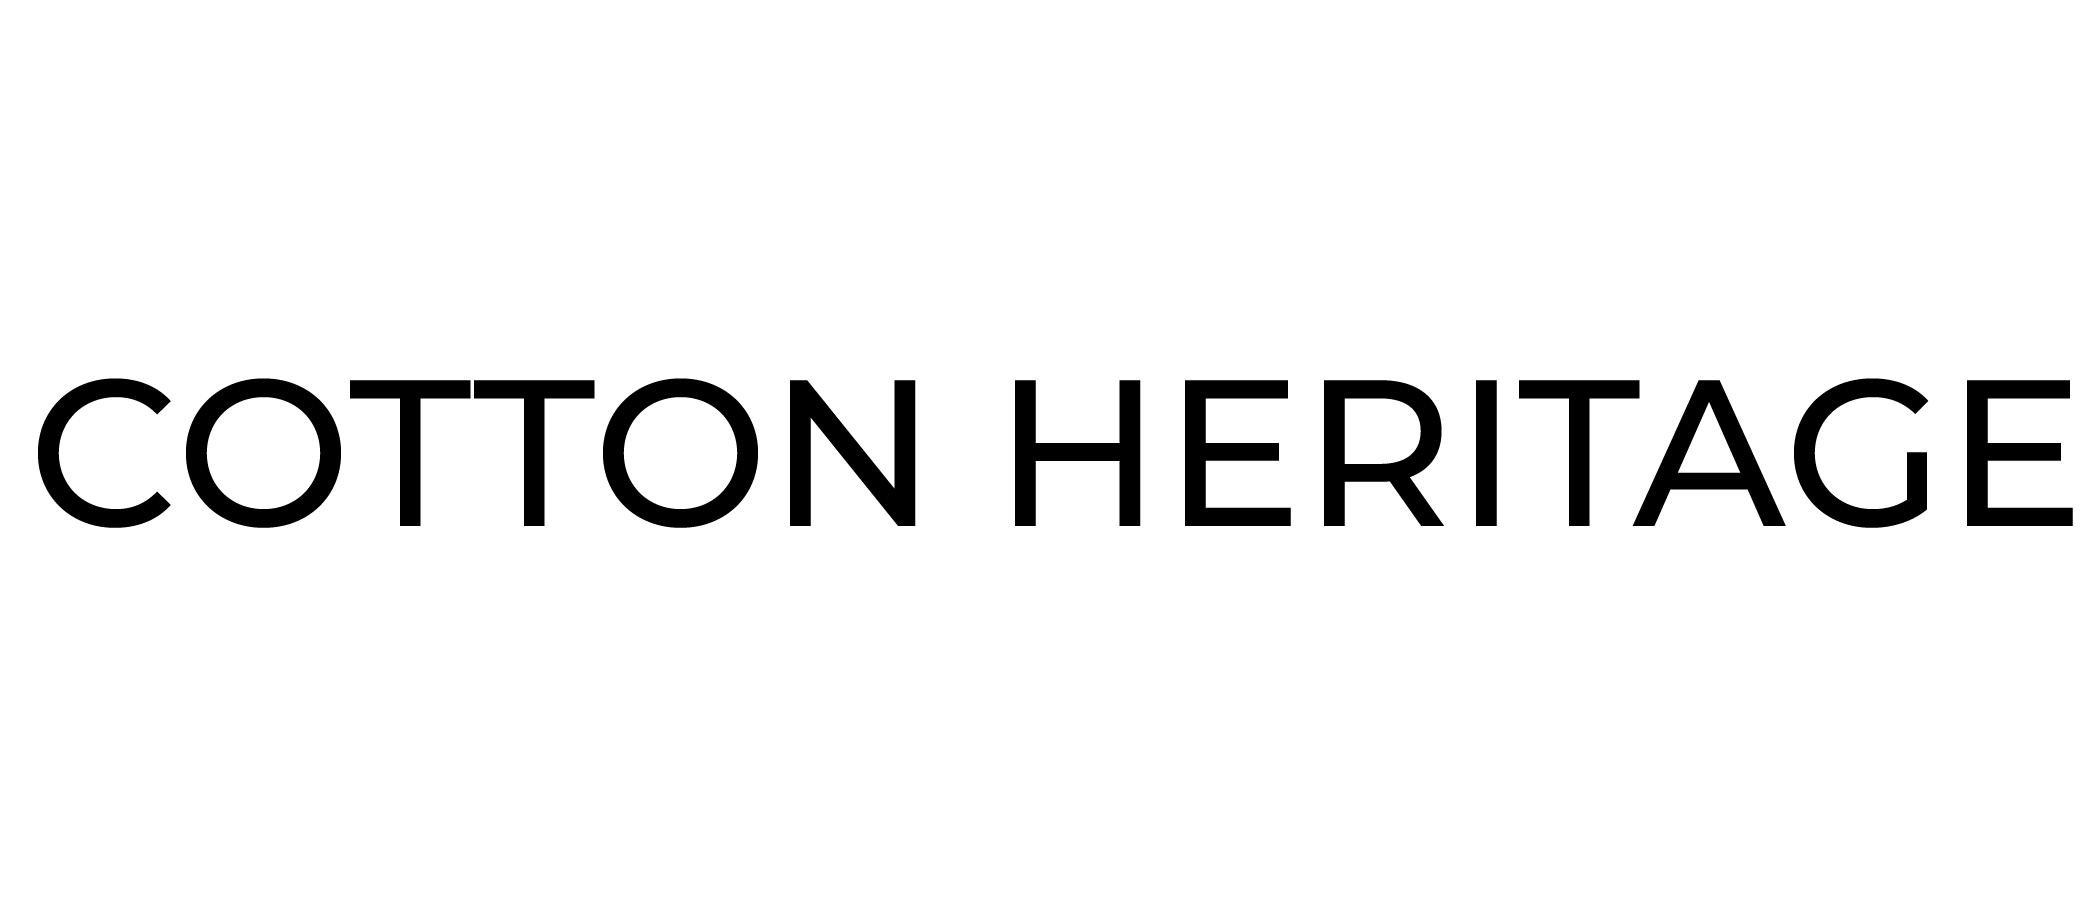 COTTON HERITAGE's logo